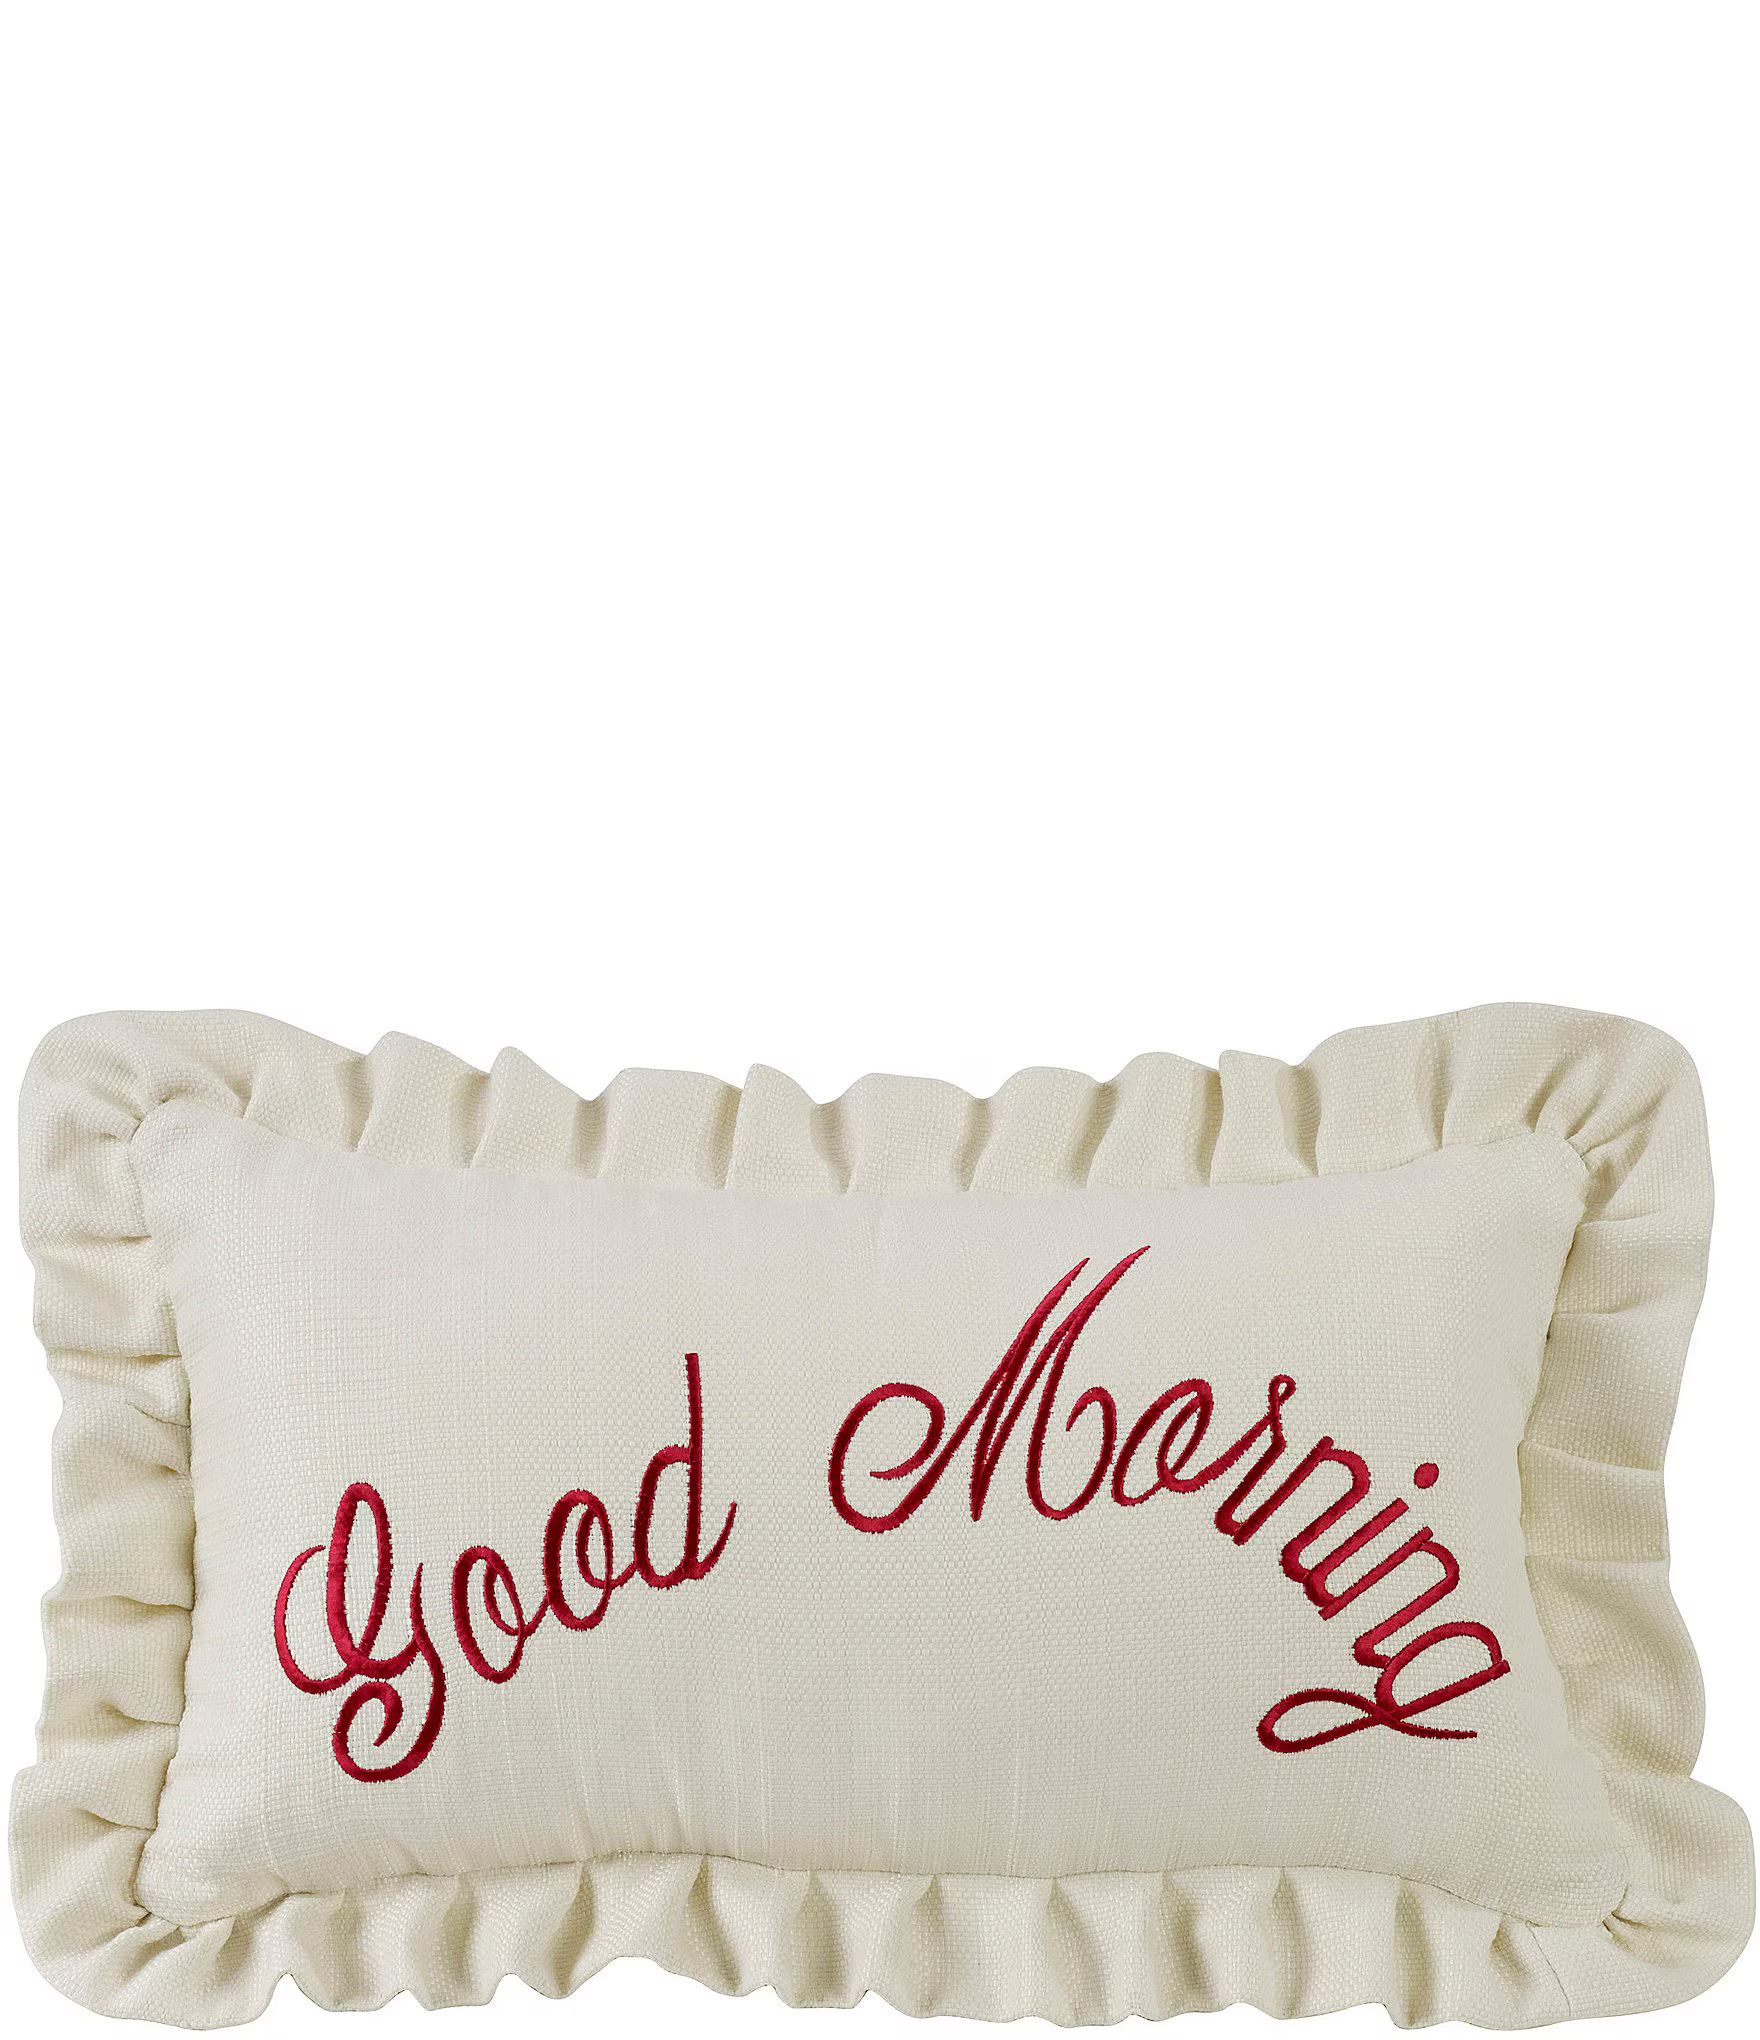 "Good Morning" Embroidery Pillow | Dillard's